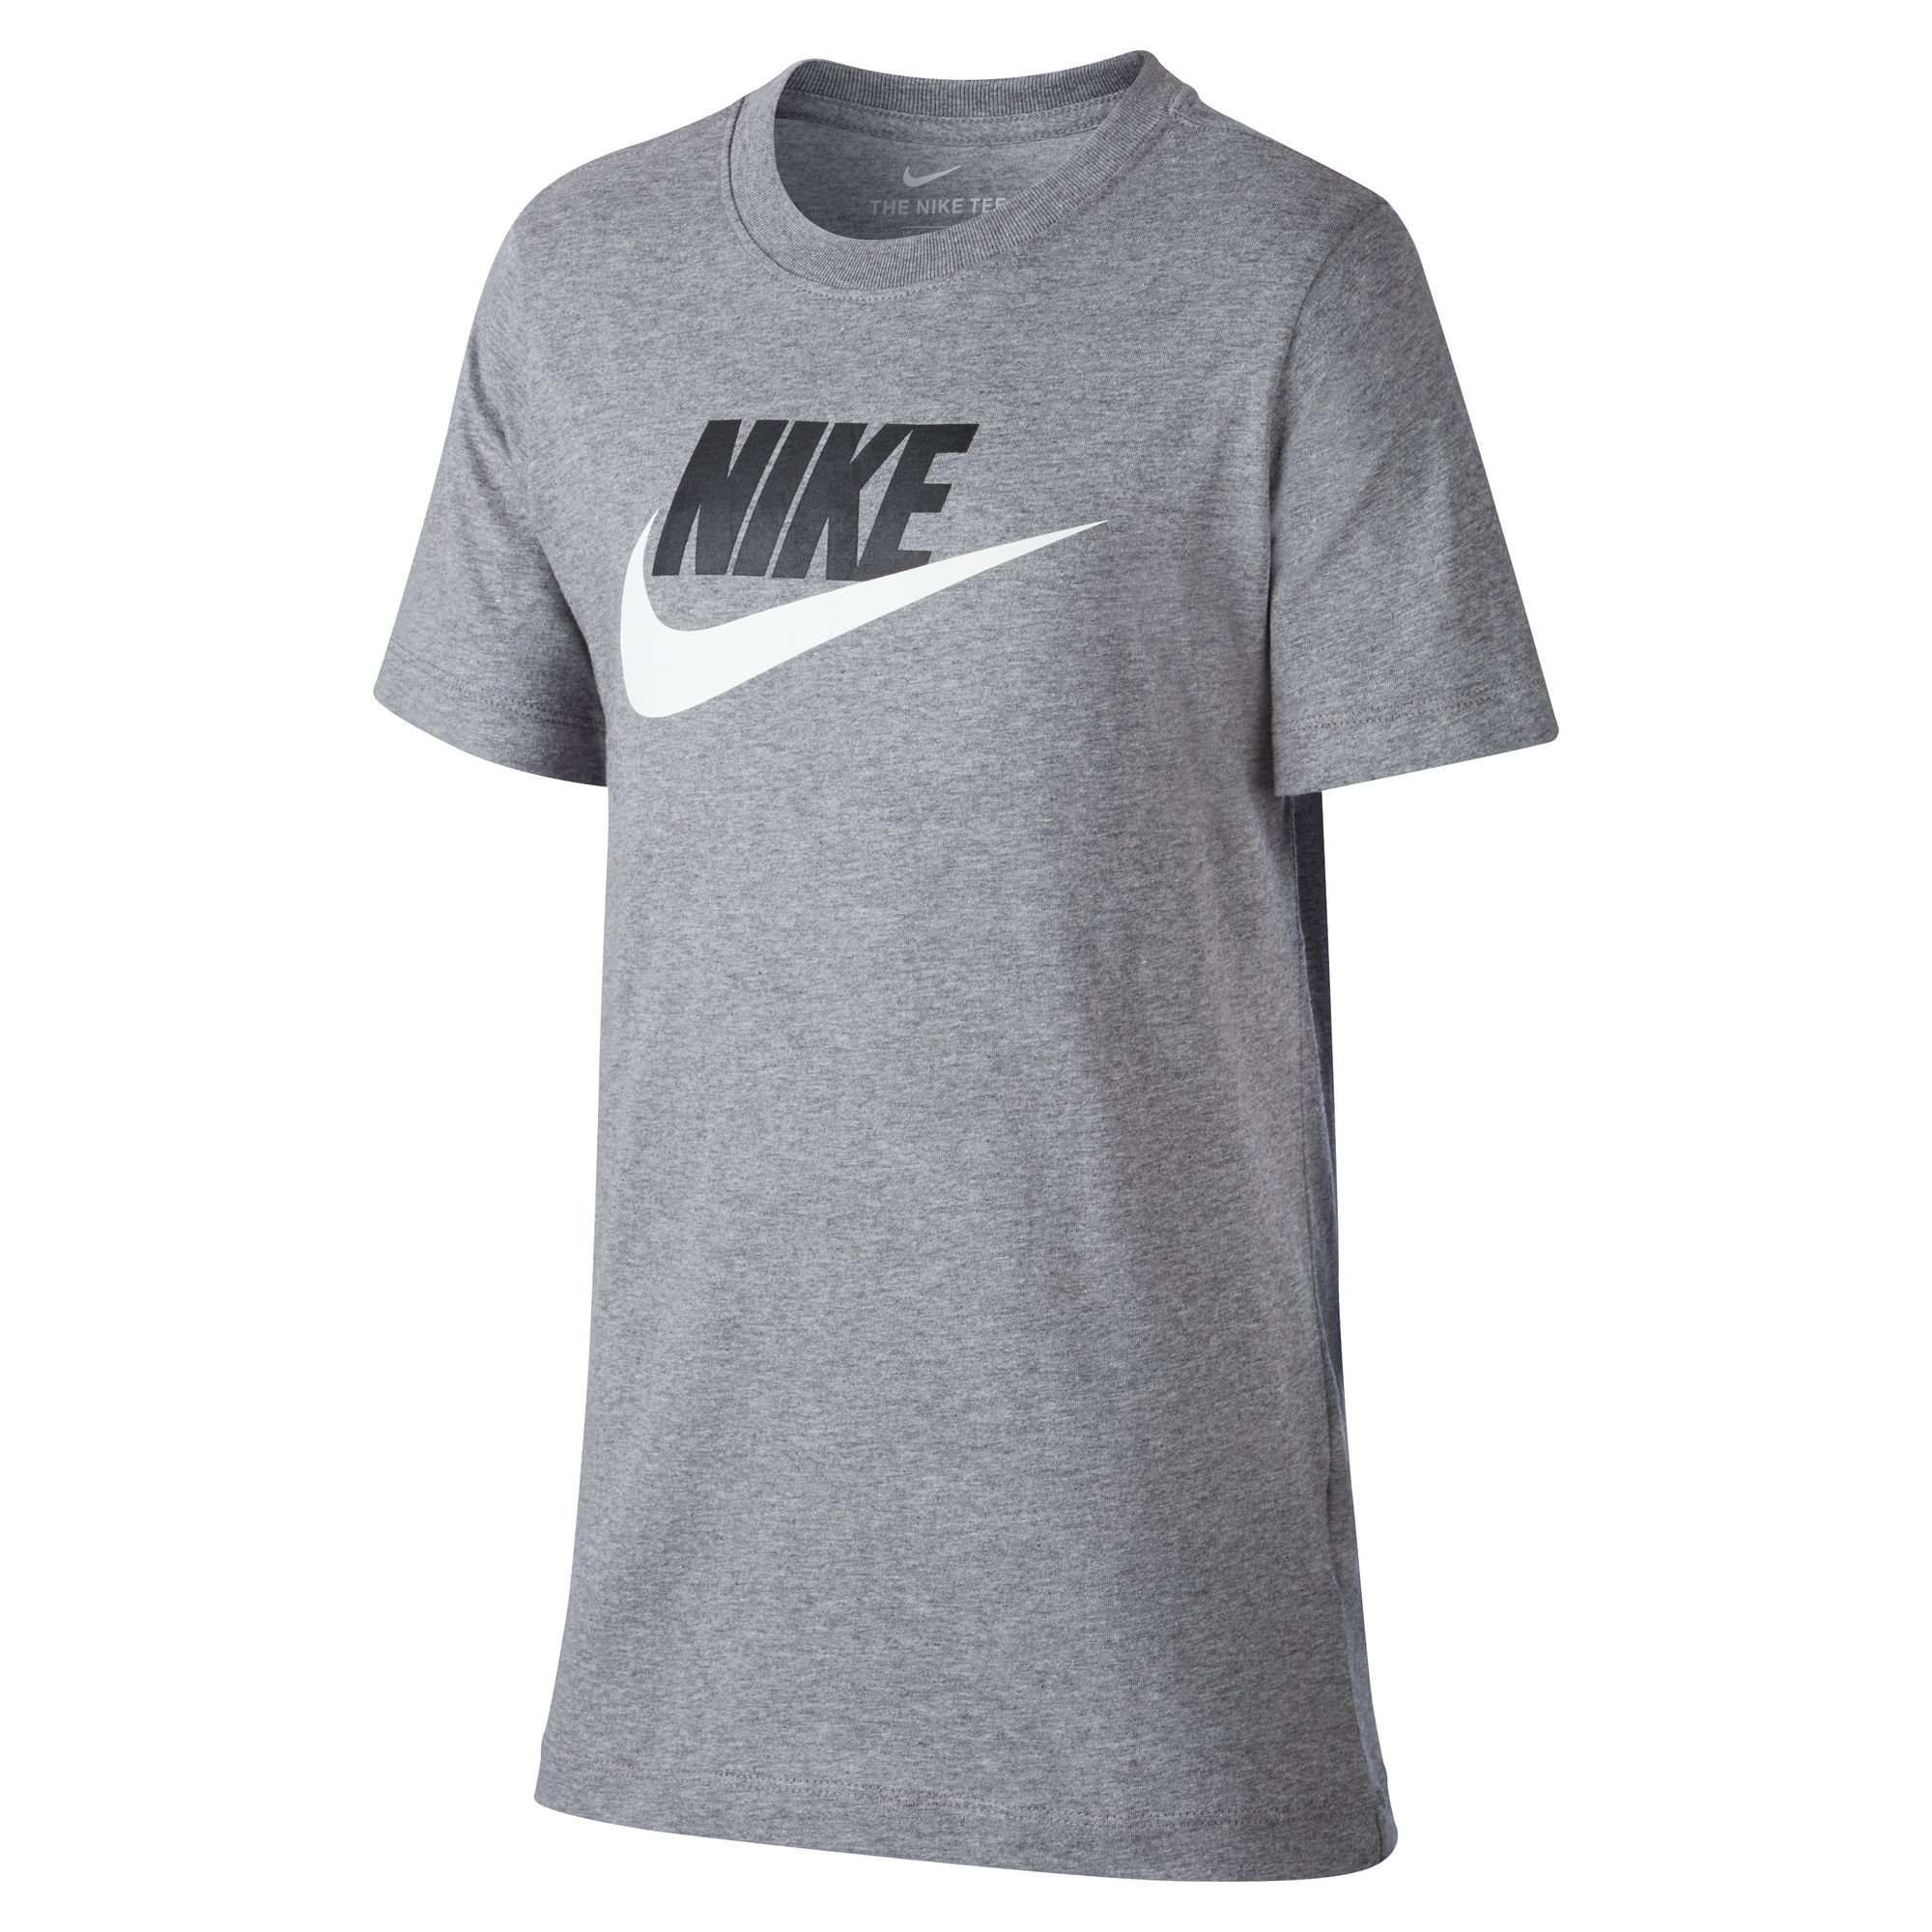 COTTON T-Shirt KIDS' Sportswear T-SHIRT Nike grau-meliert BIG